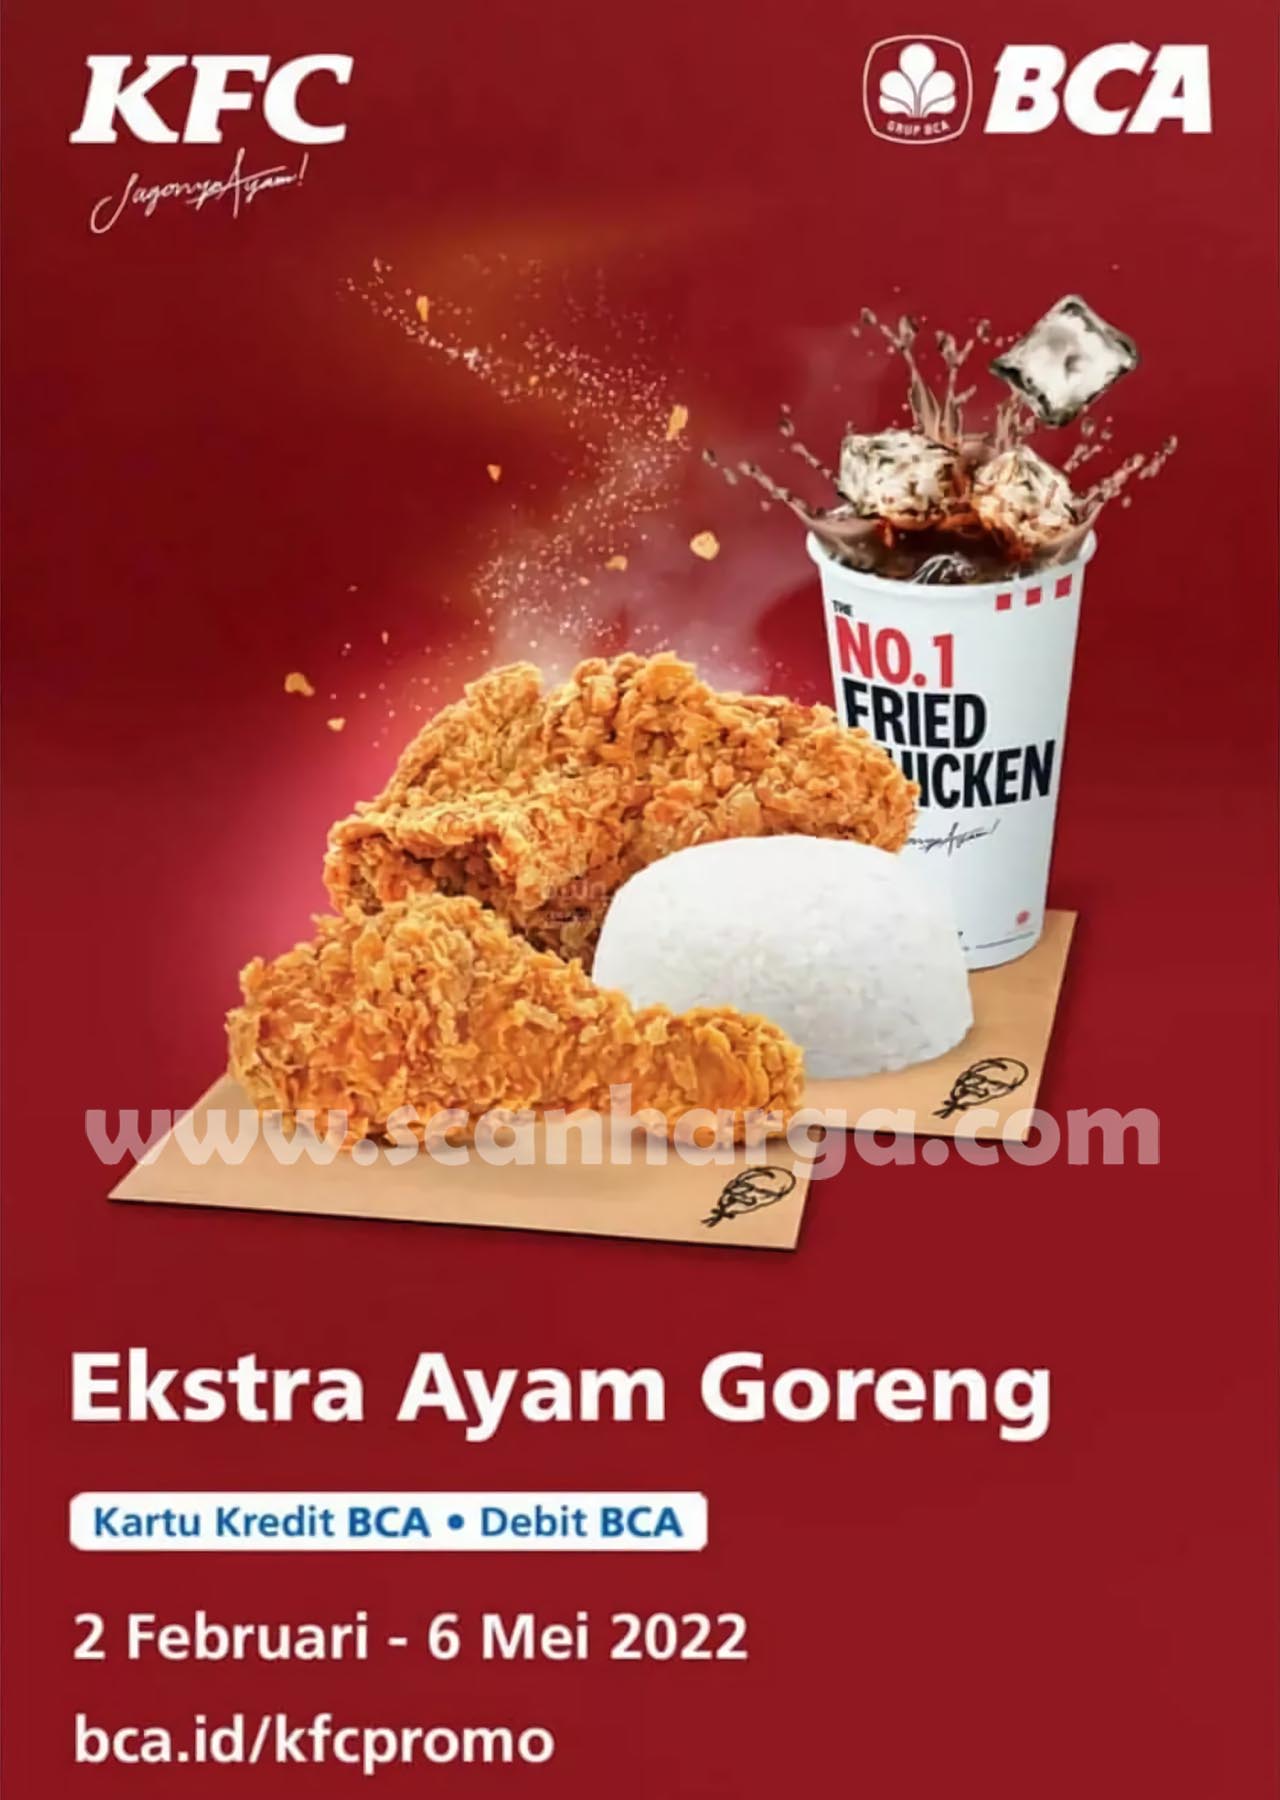 Promo KFC Ekstra Ayam Goreng dengan Debit & Kartu Kredit BCA